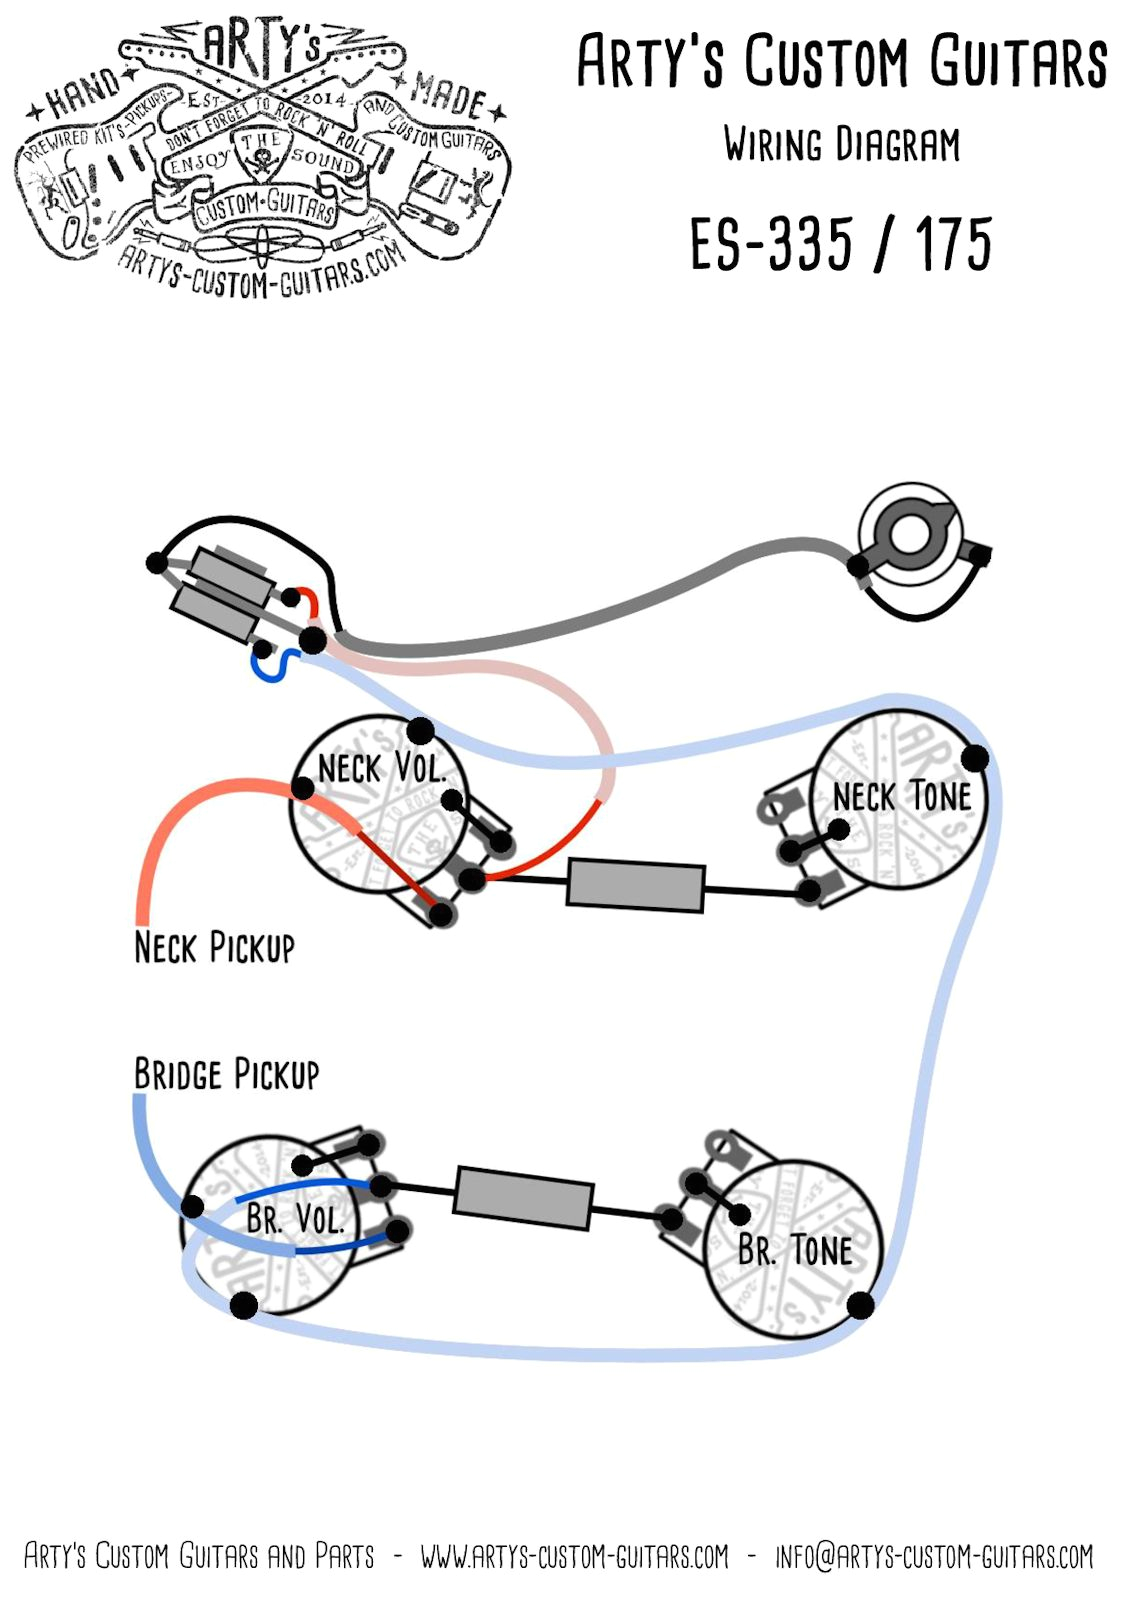 gibson 335 wiring diagram wiring diagram review wiring diagram for gibson 335 es 335 wiring diagram